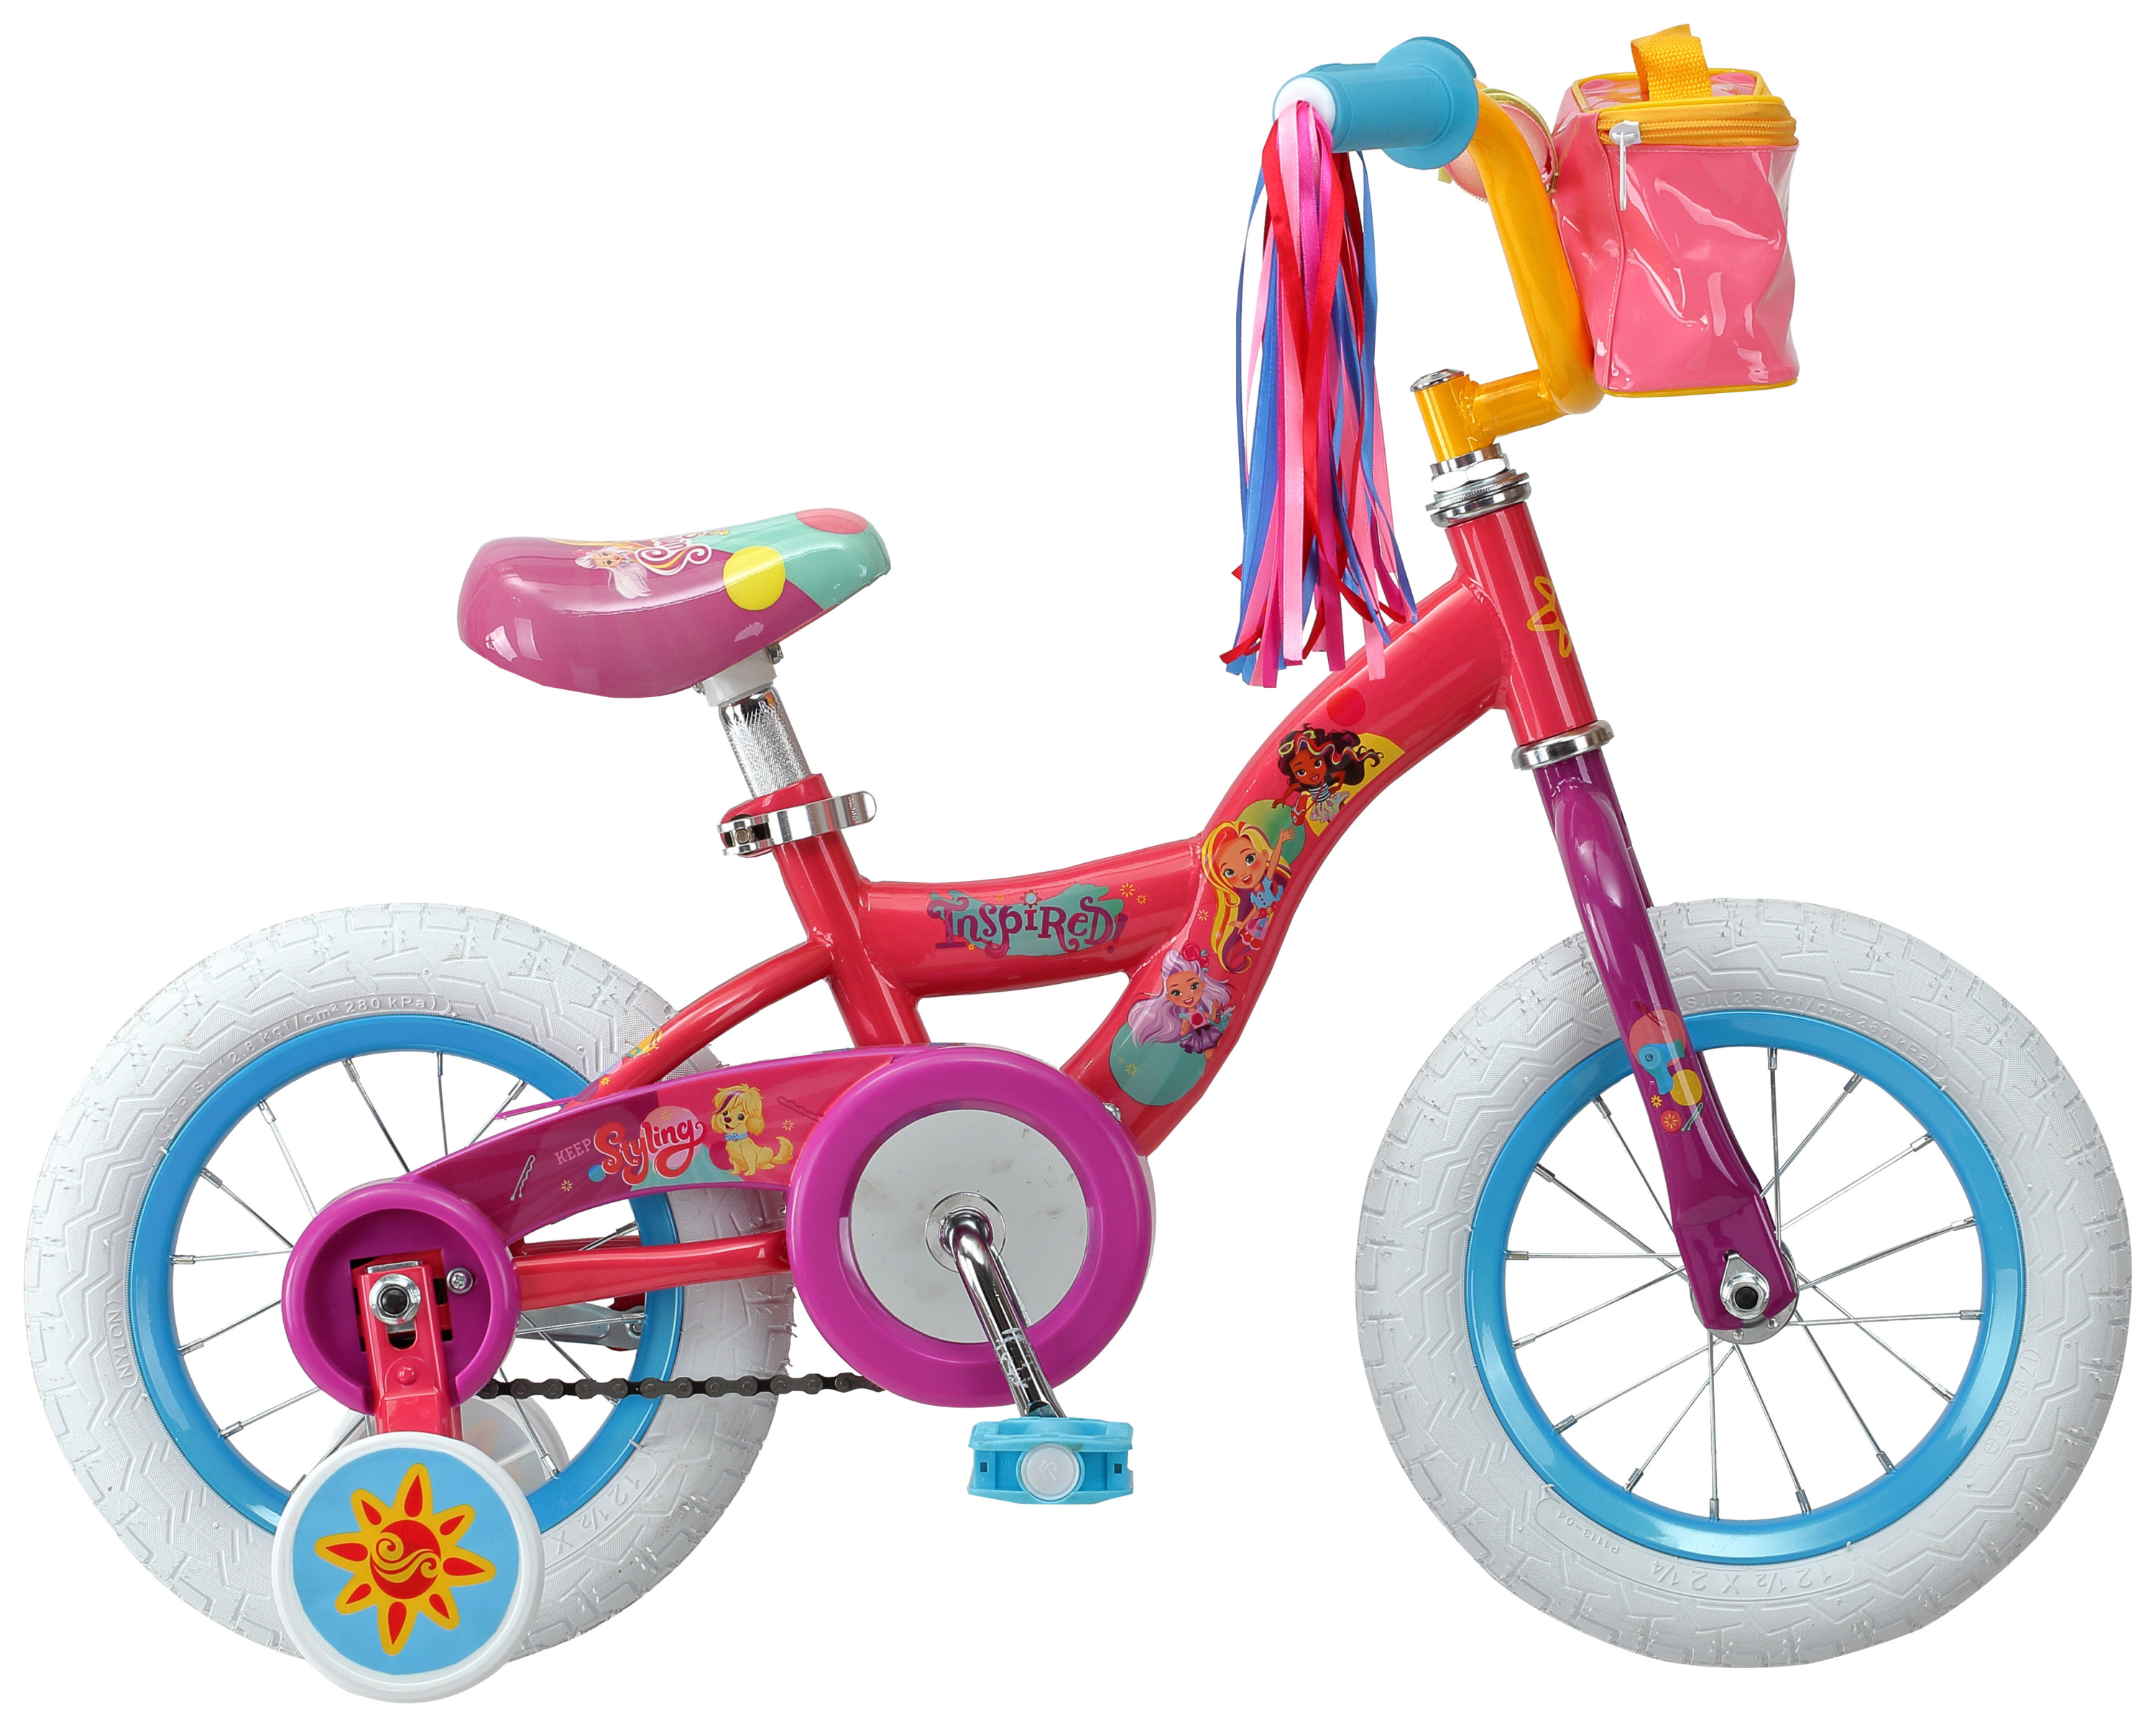 Nickelodeon Sunny Day kids bike, 12-inch wheels, training wheels, Girls, Boys, Pink - image 1 of 5